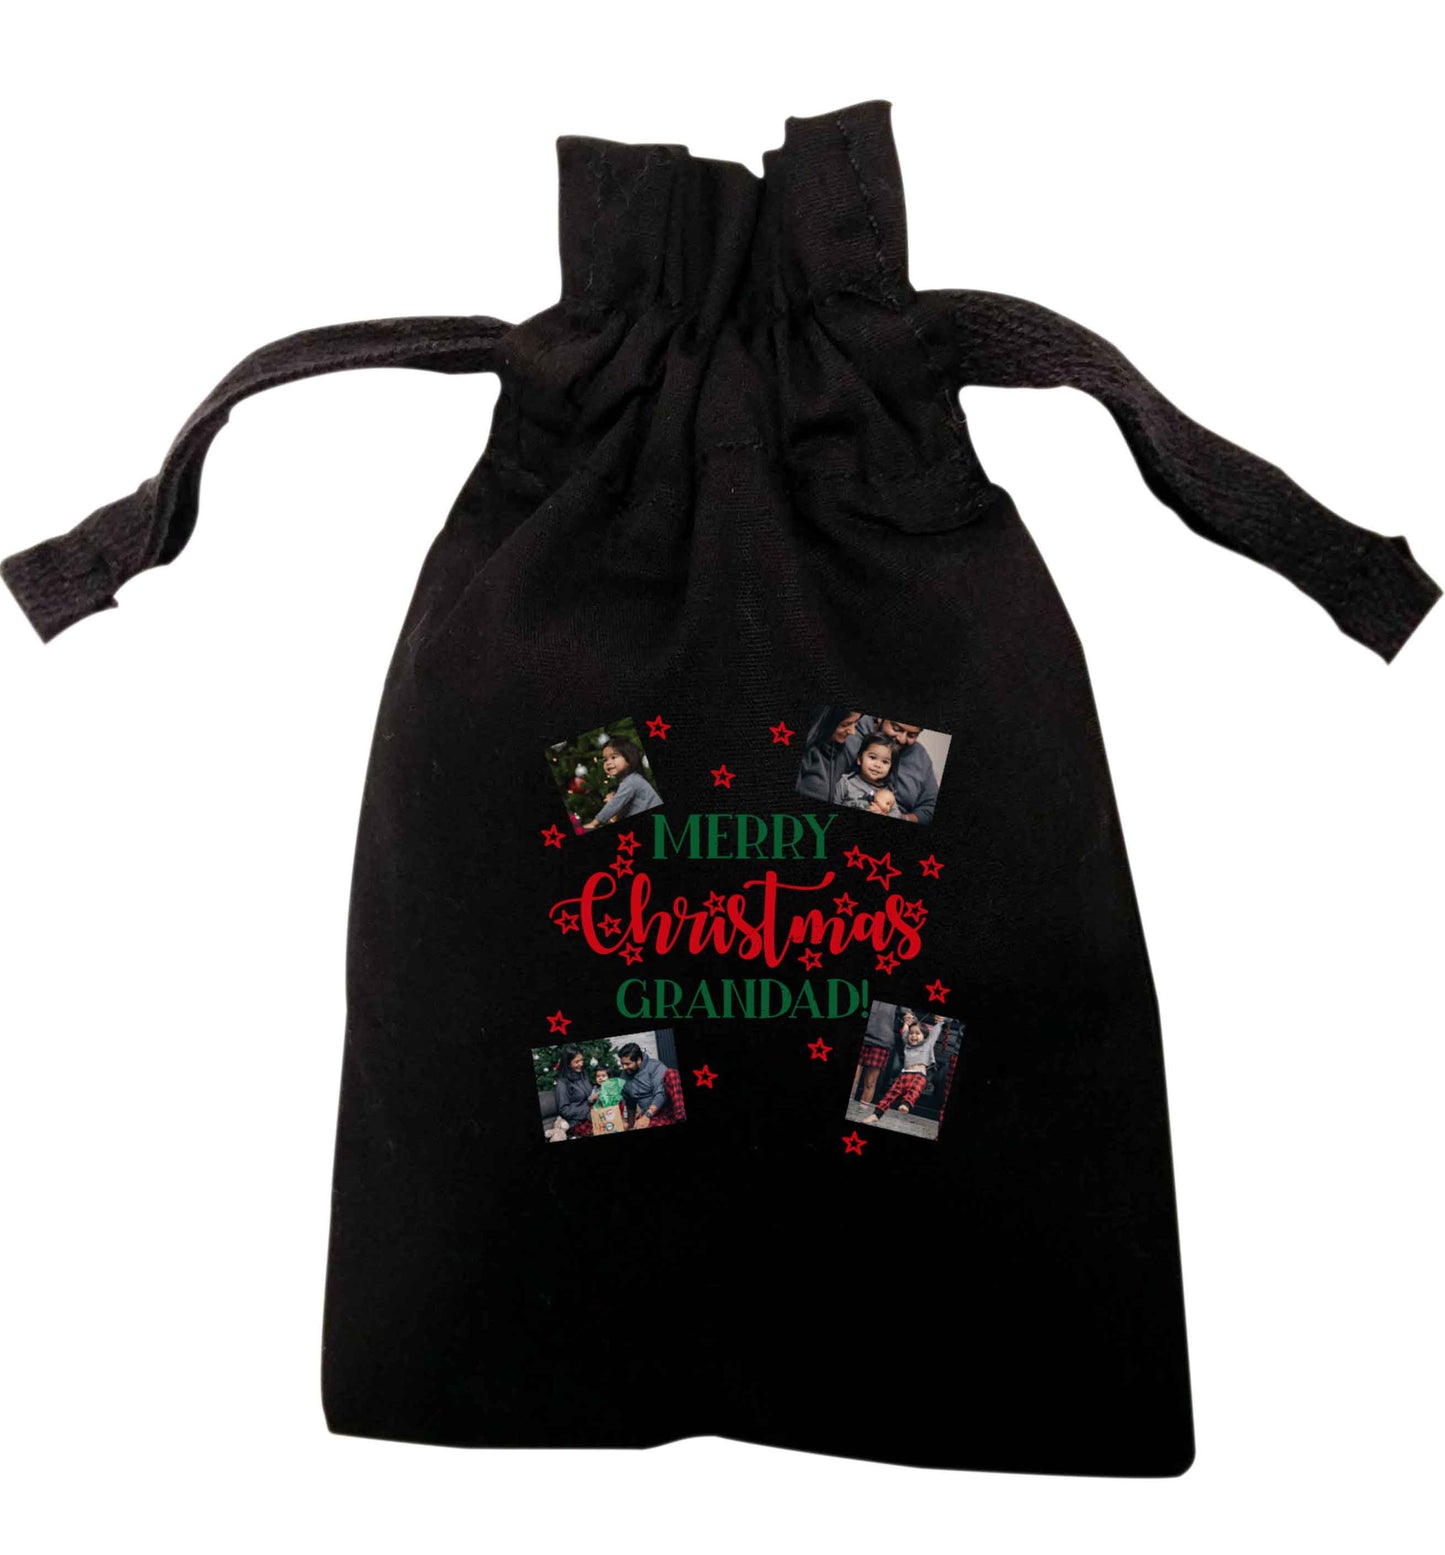 Merry Christmas grandad | XS - L | Pouch / Drawstring bag / Sack | Organic Cotton | Bulk discounts available!